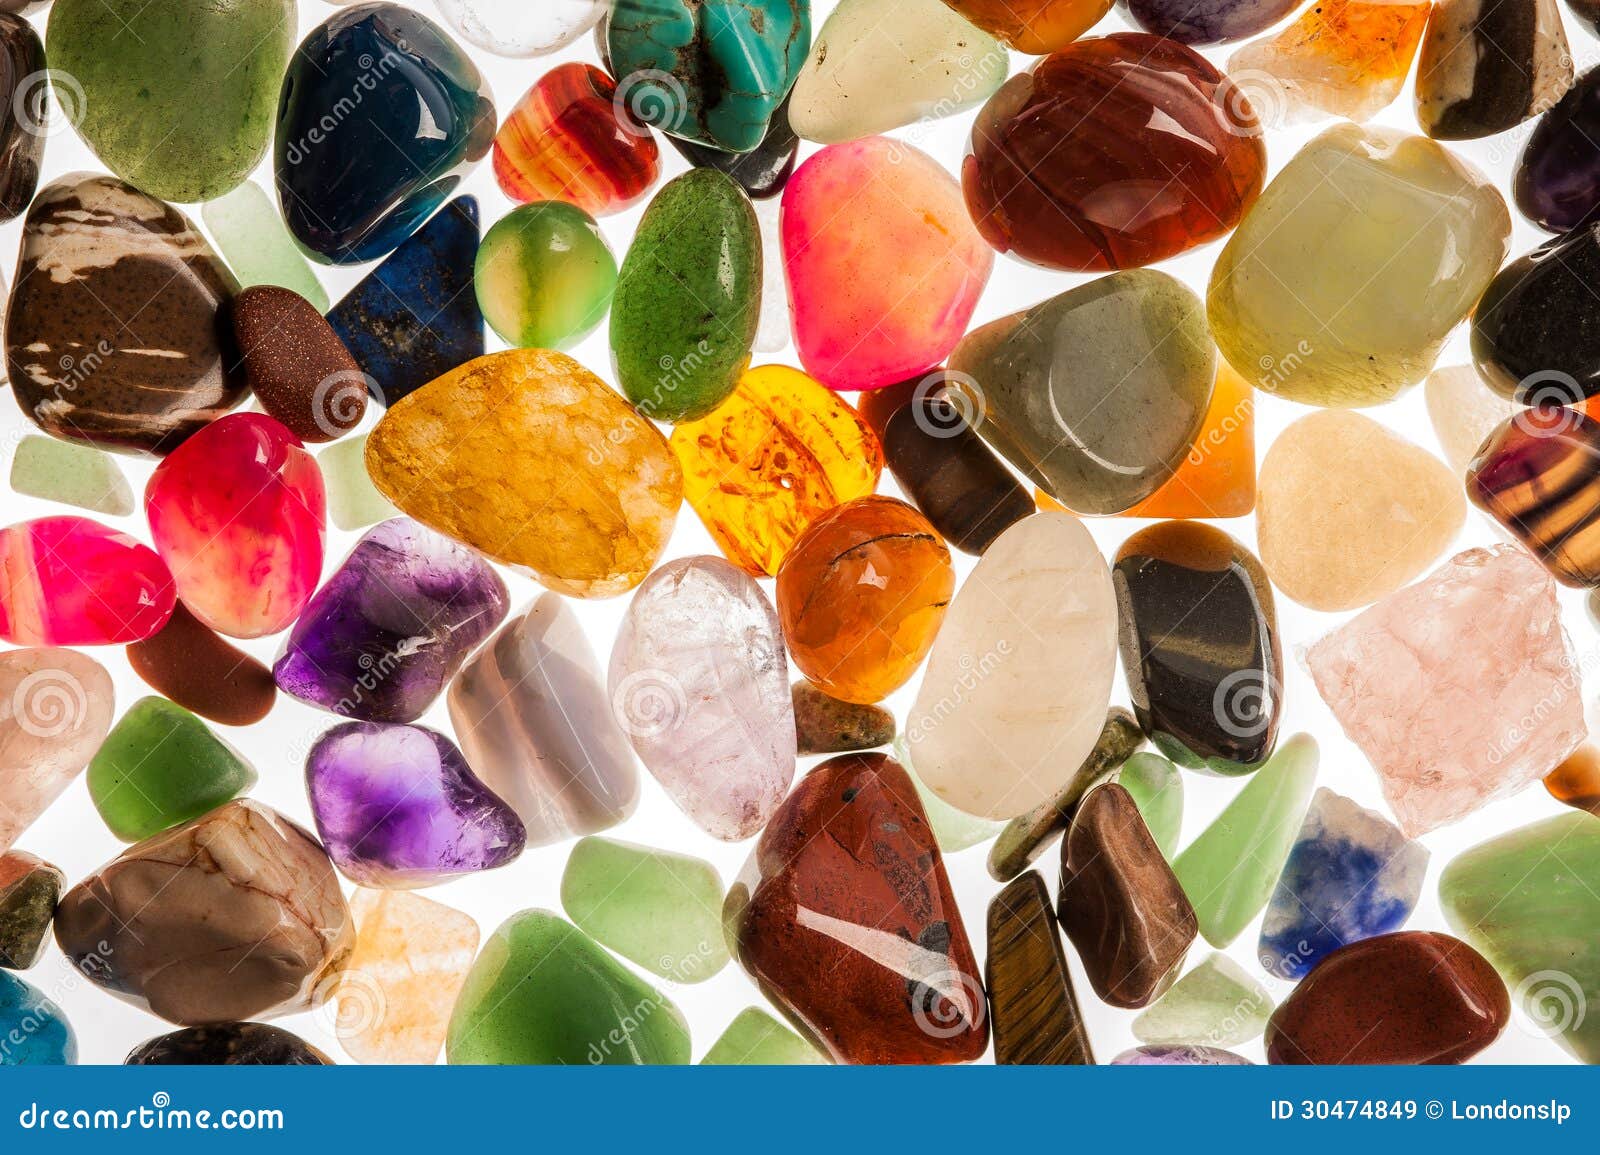 semi precious gem stones